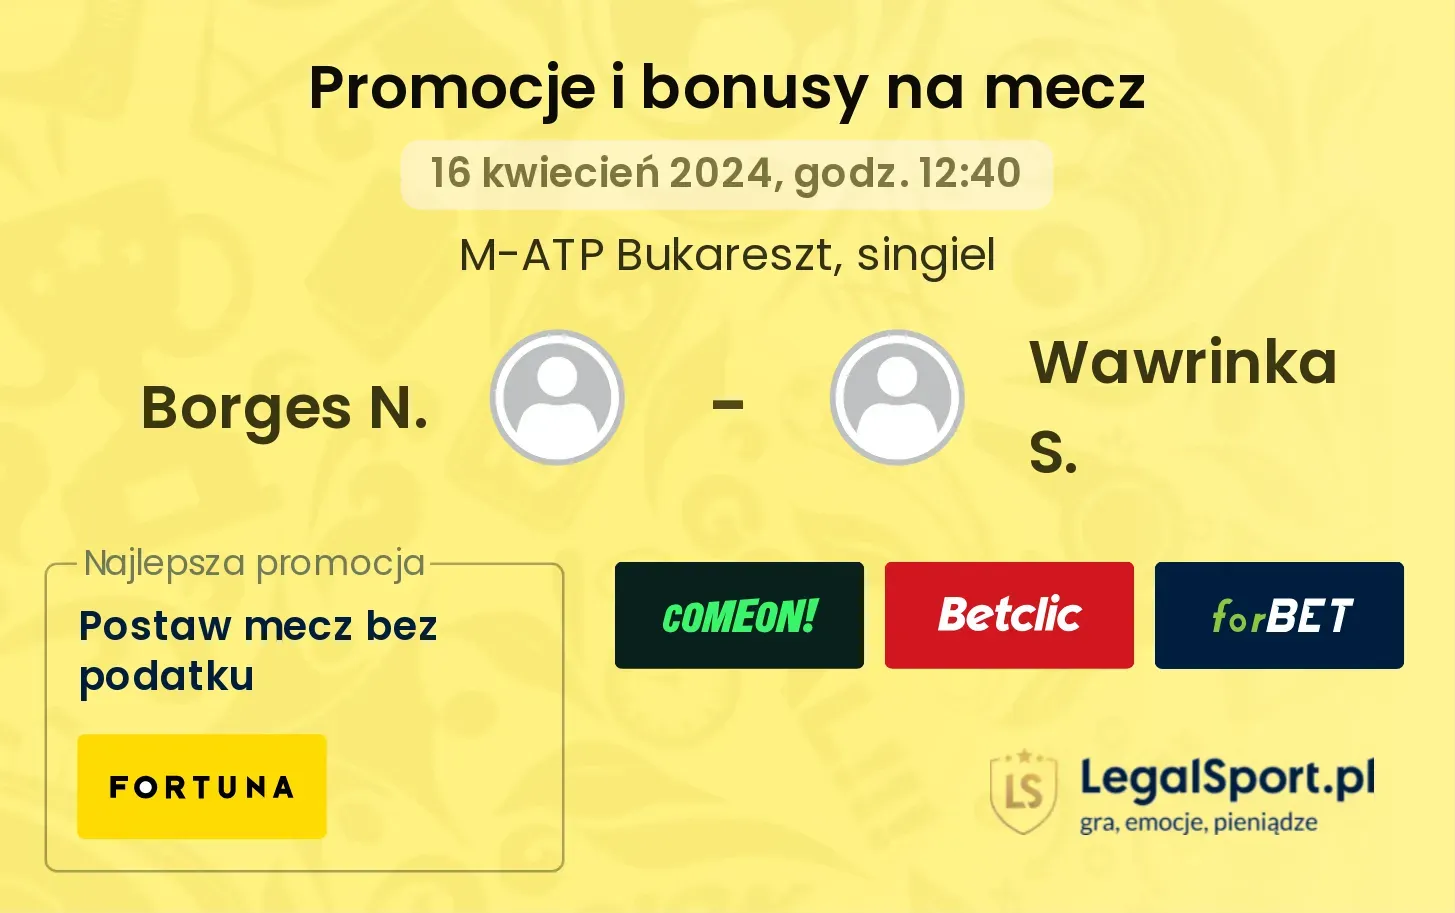 Borges N. - Wawrinka S. promocje bonusy na mecz